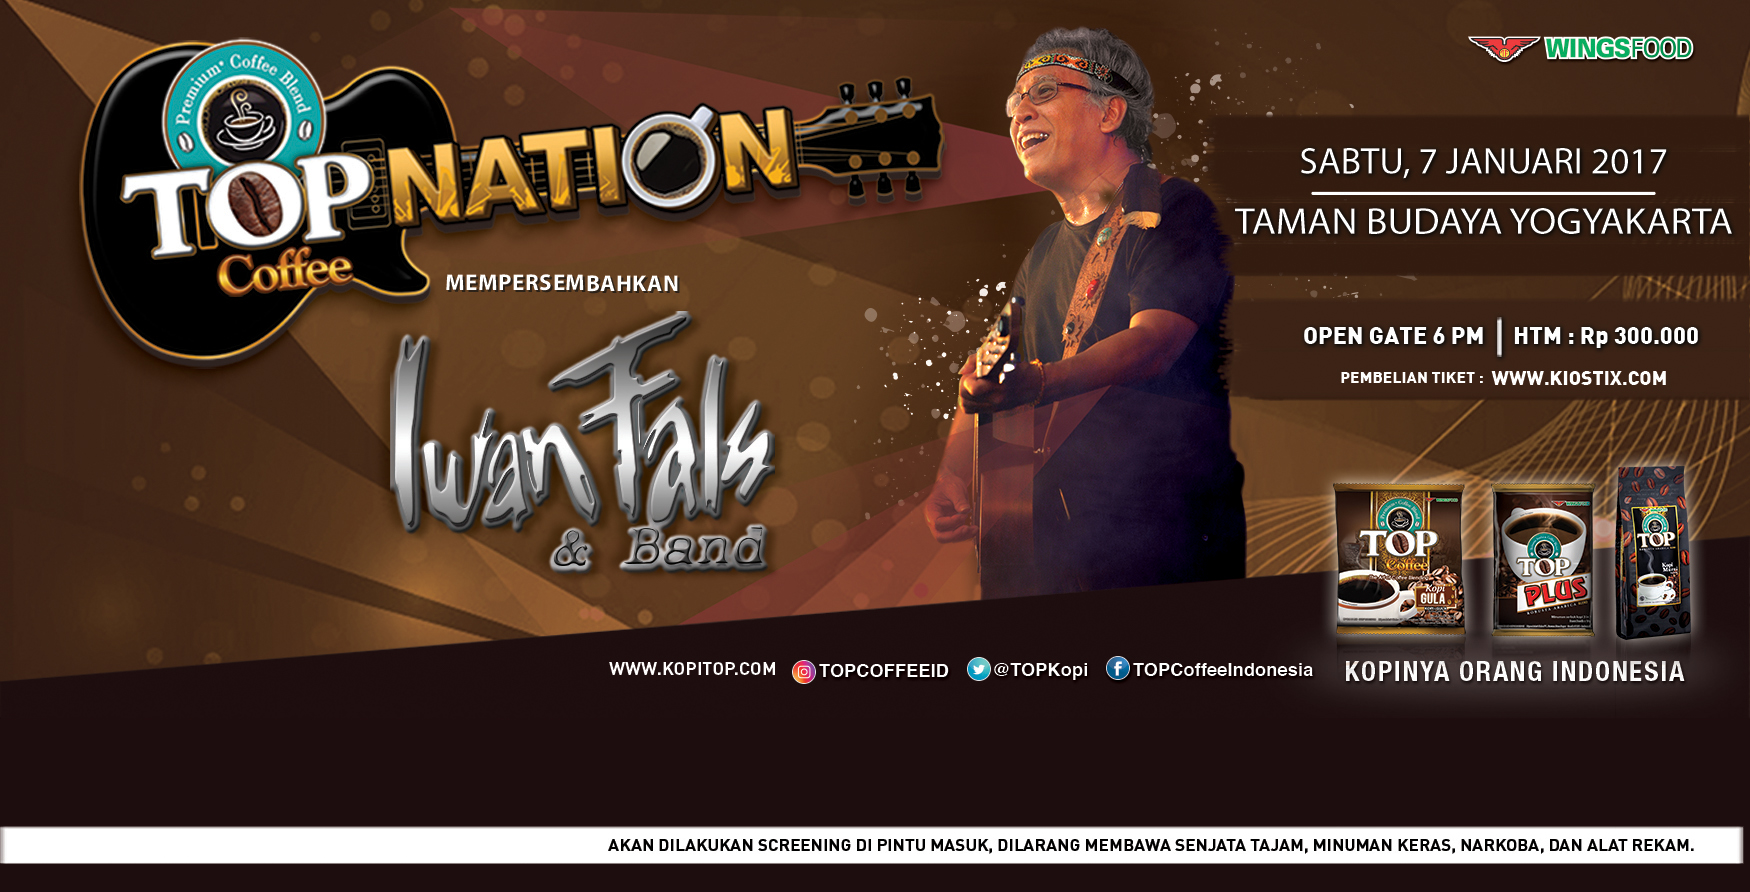 Top Nation Coffee Iwan Fals Concert